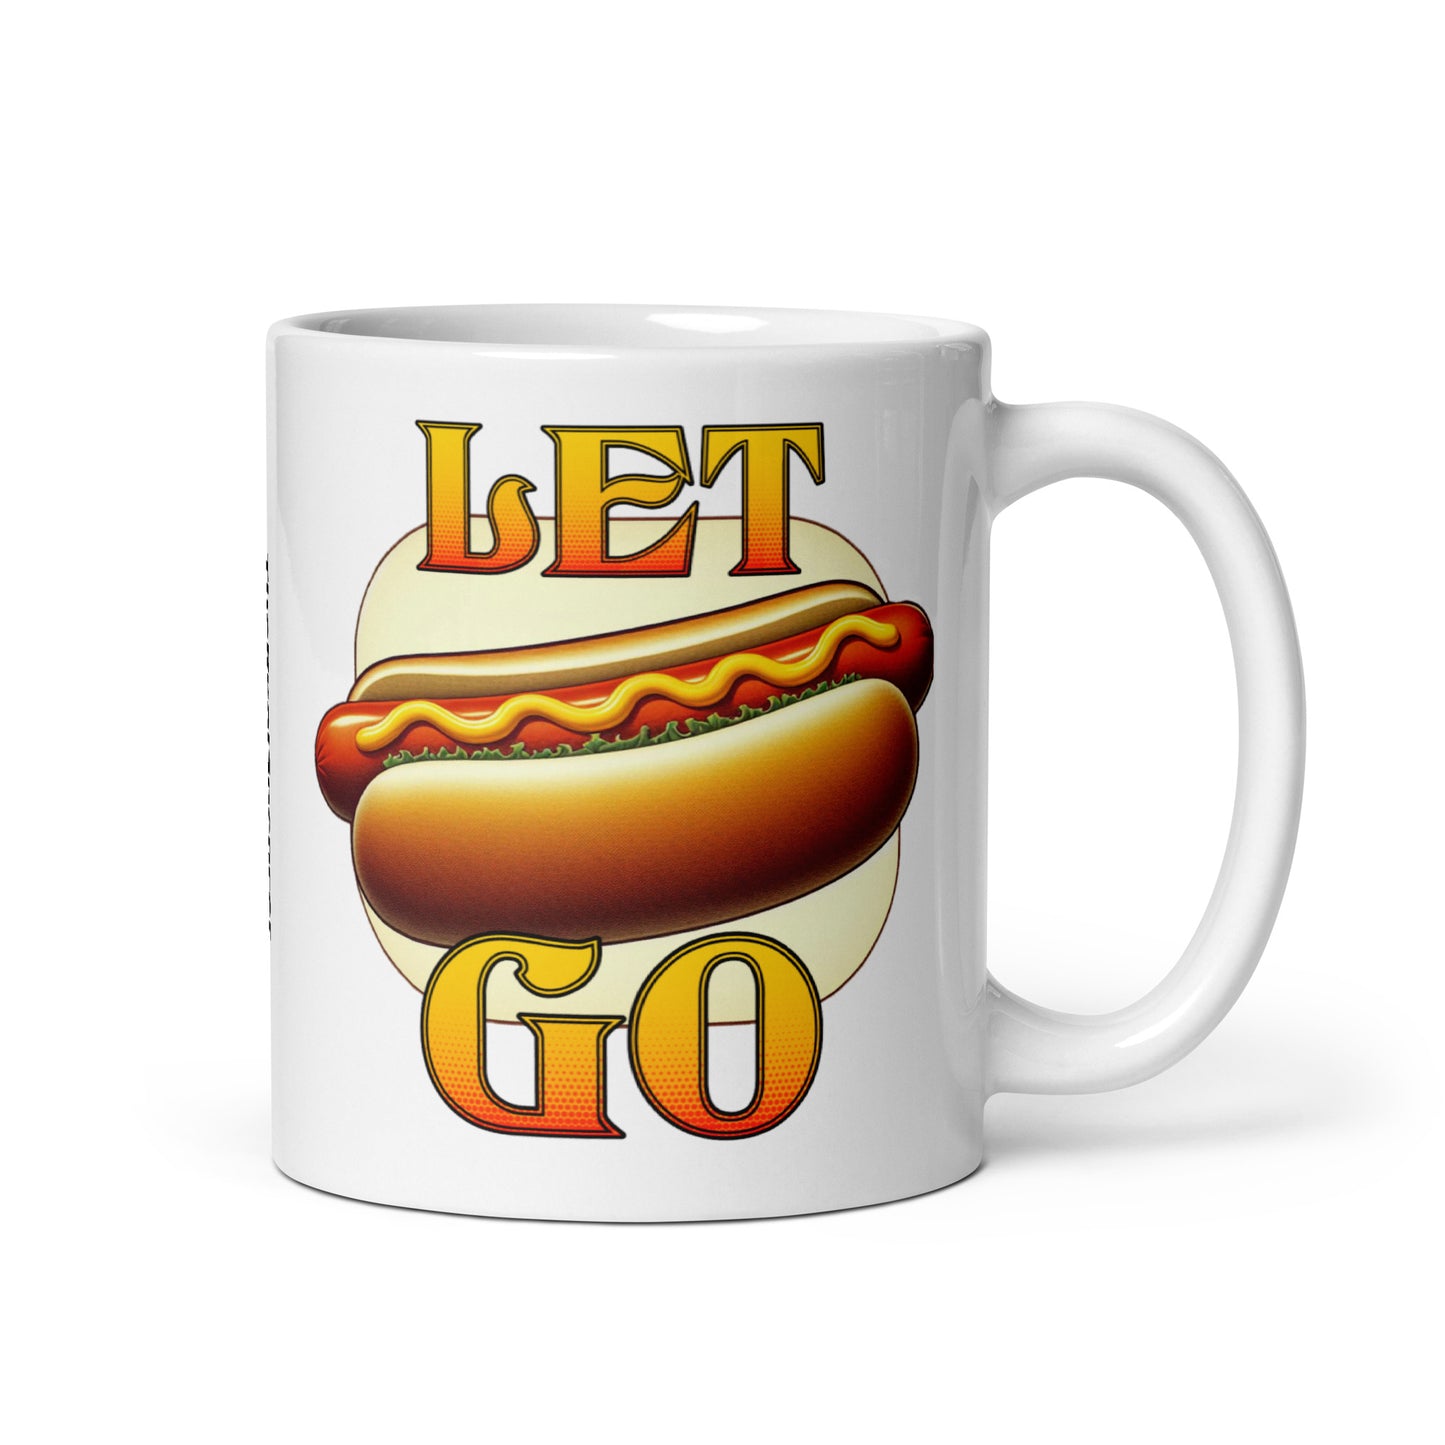 Let Go Mug